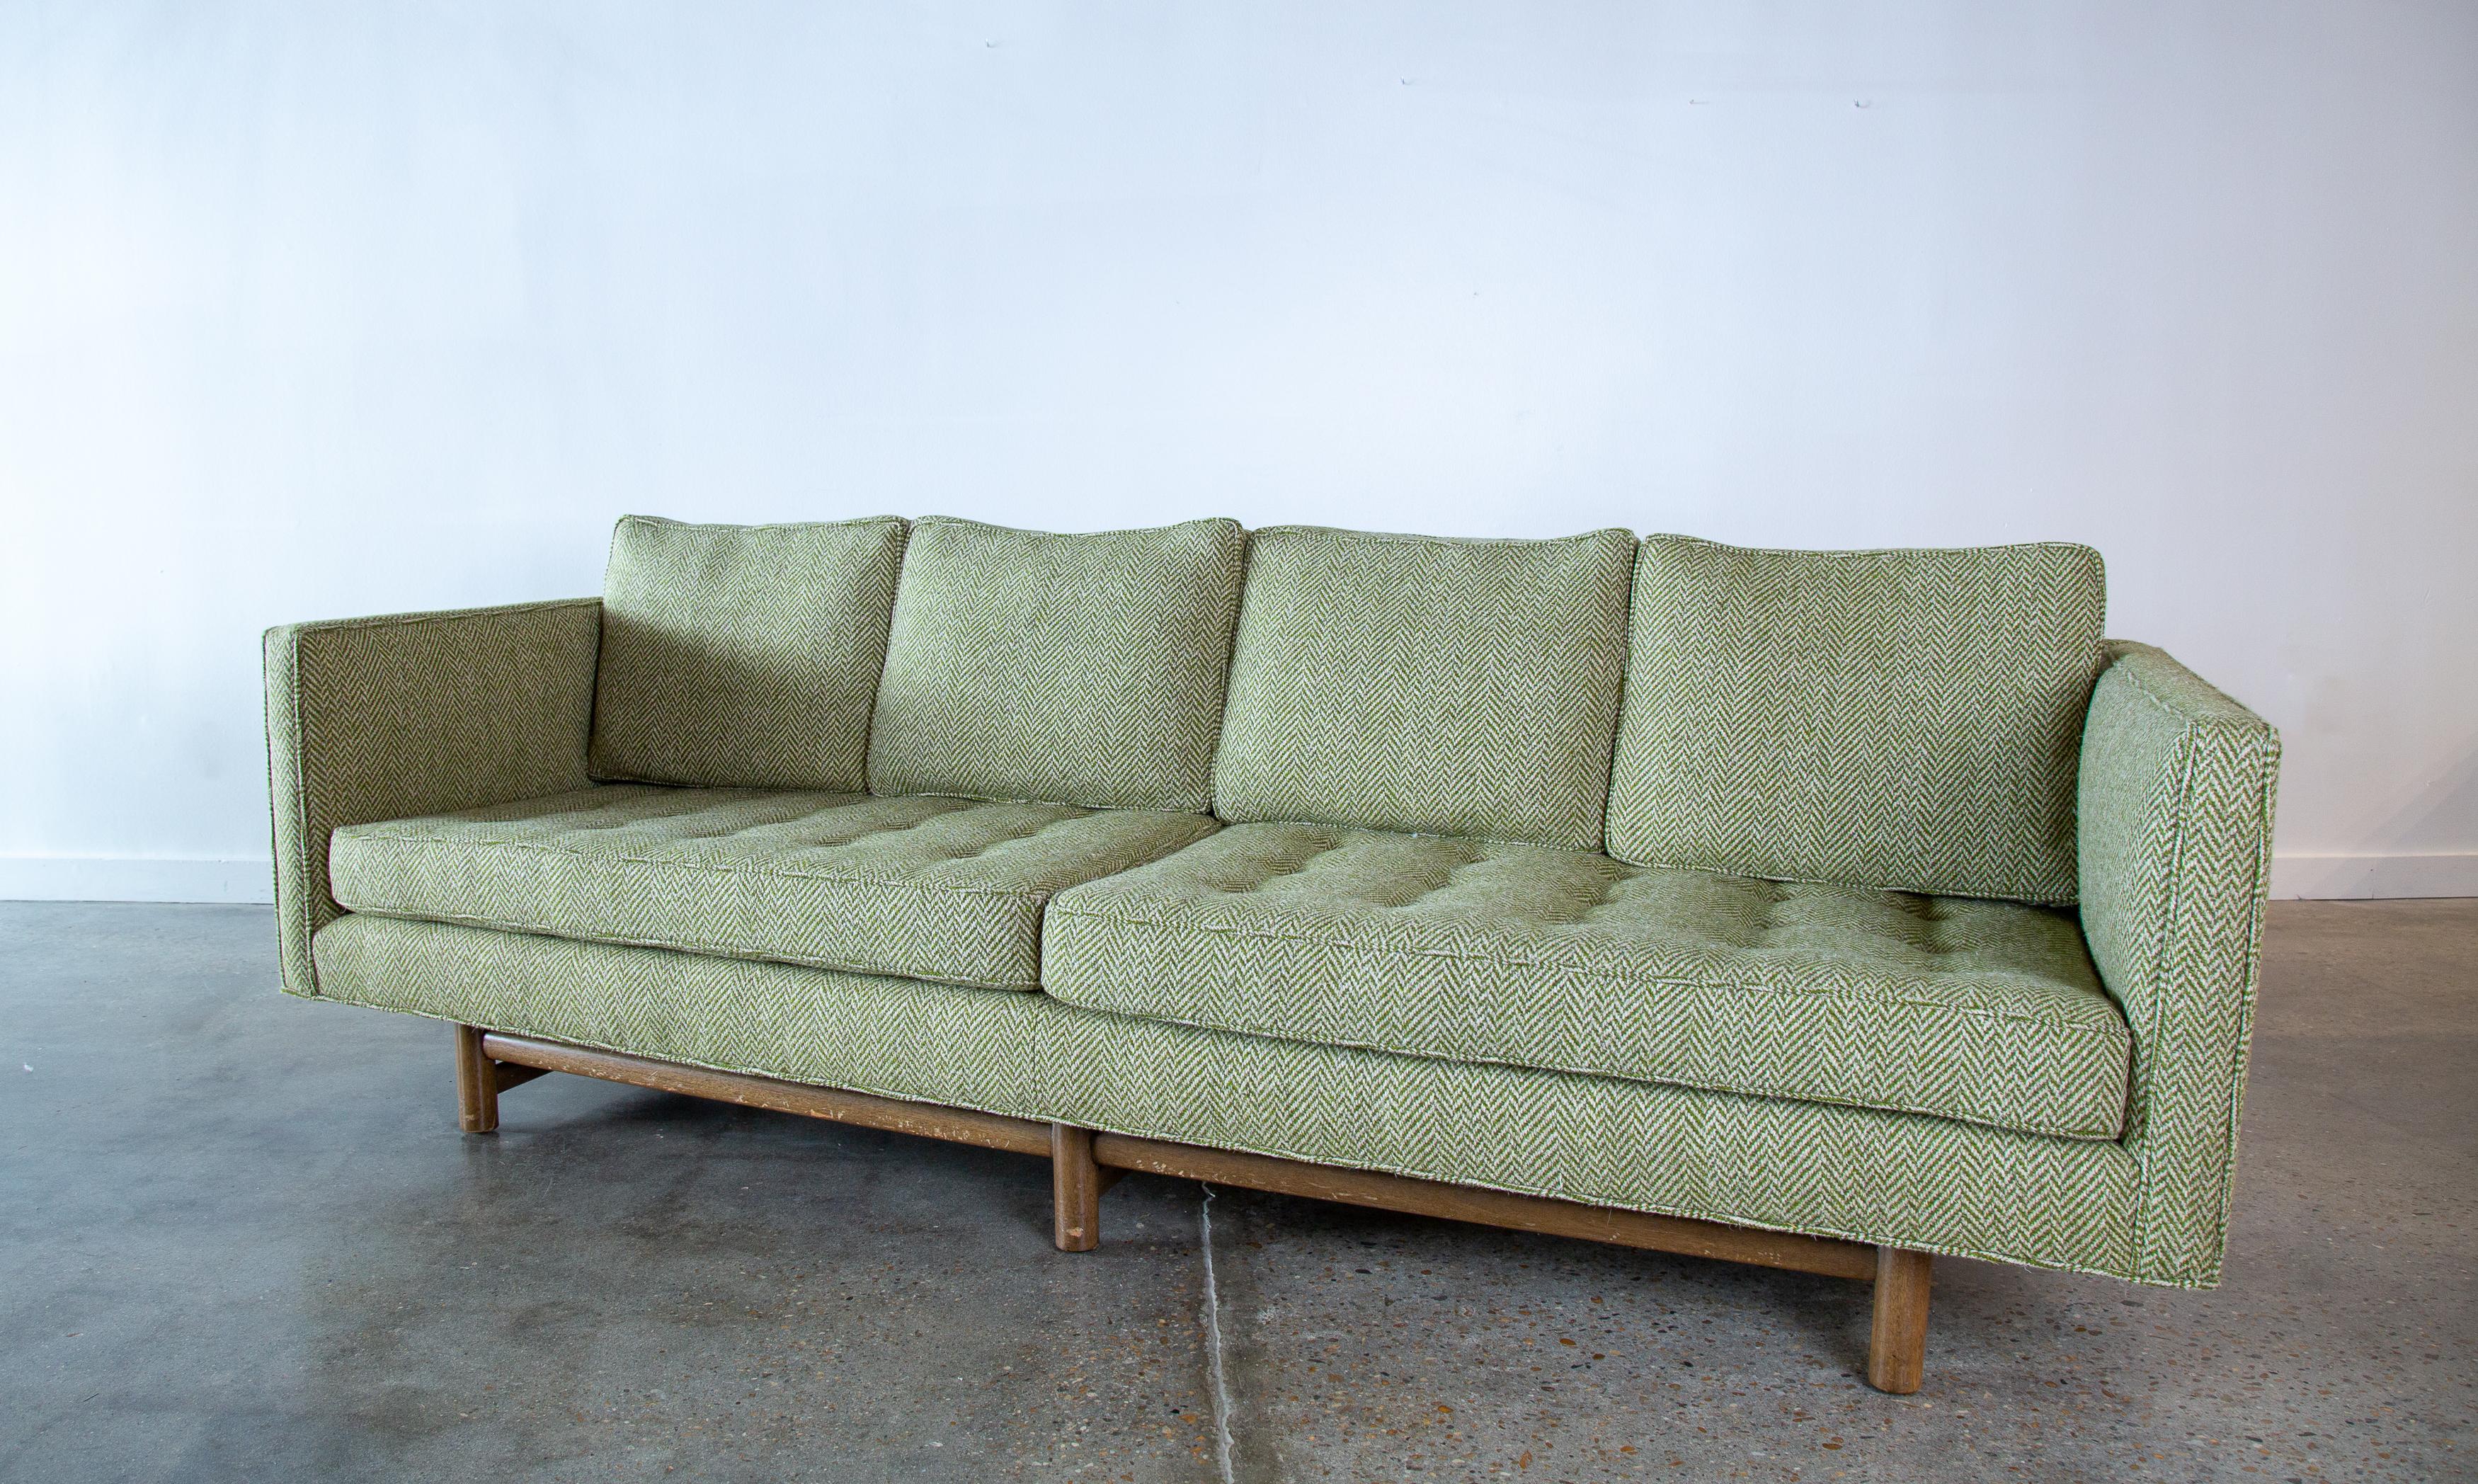 1950s Edward Wormley Dunbar Green Wool Sofa model 5138 Mahogany Base (2 avail) For Sale 2